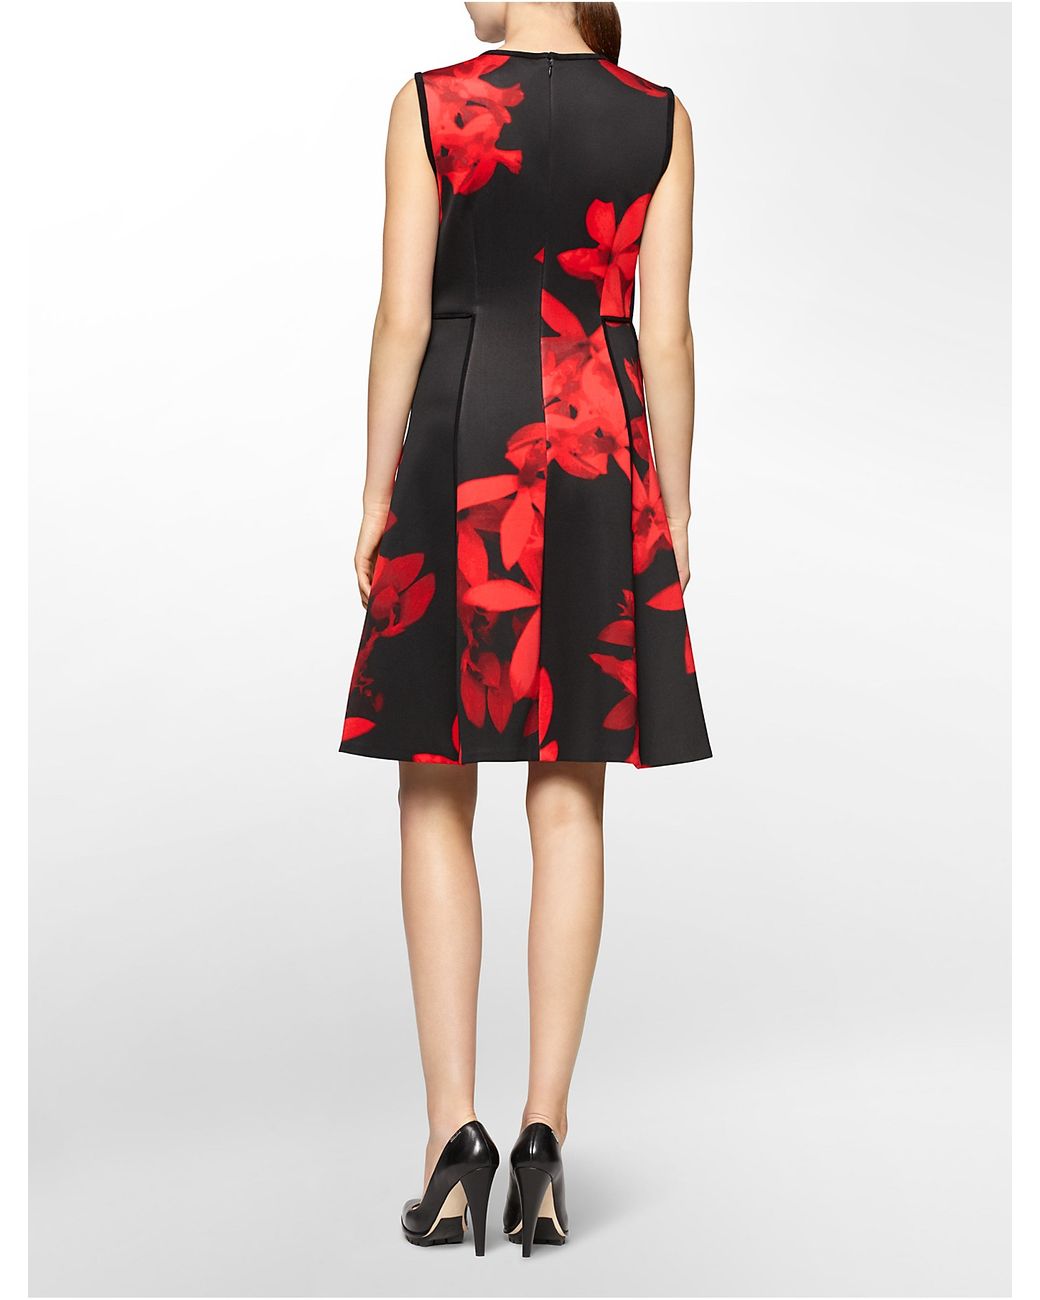 Descubrir 62+ imagen calvin klein black dress with red flowers